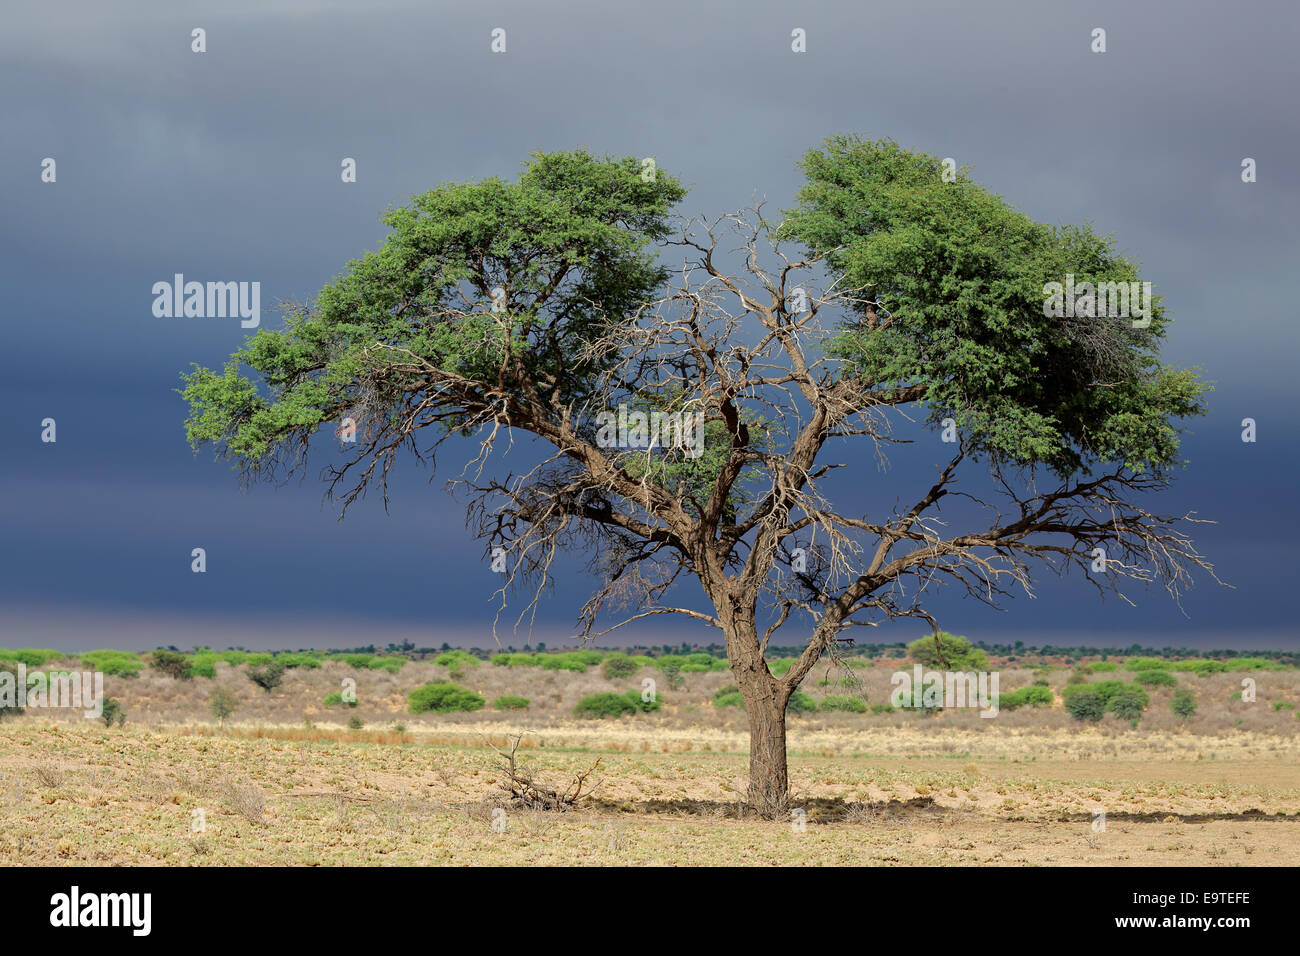 Landscape with a camelthorn Acacia tree (Acacia erioloba), Kalahari desert, South Africa Stock Photo